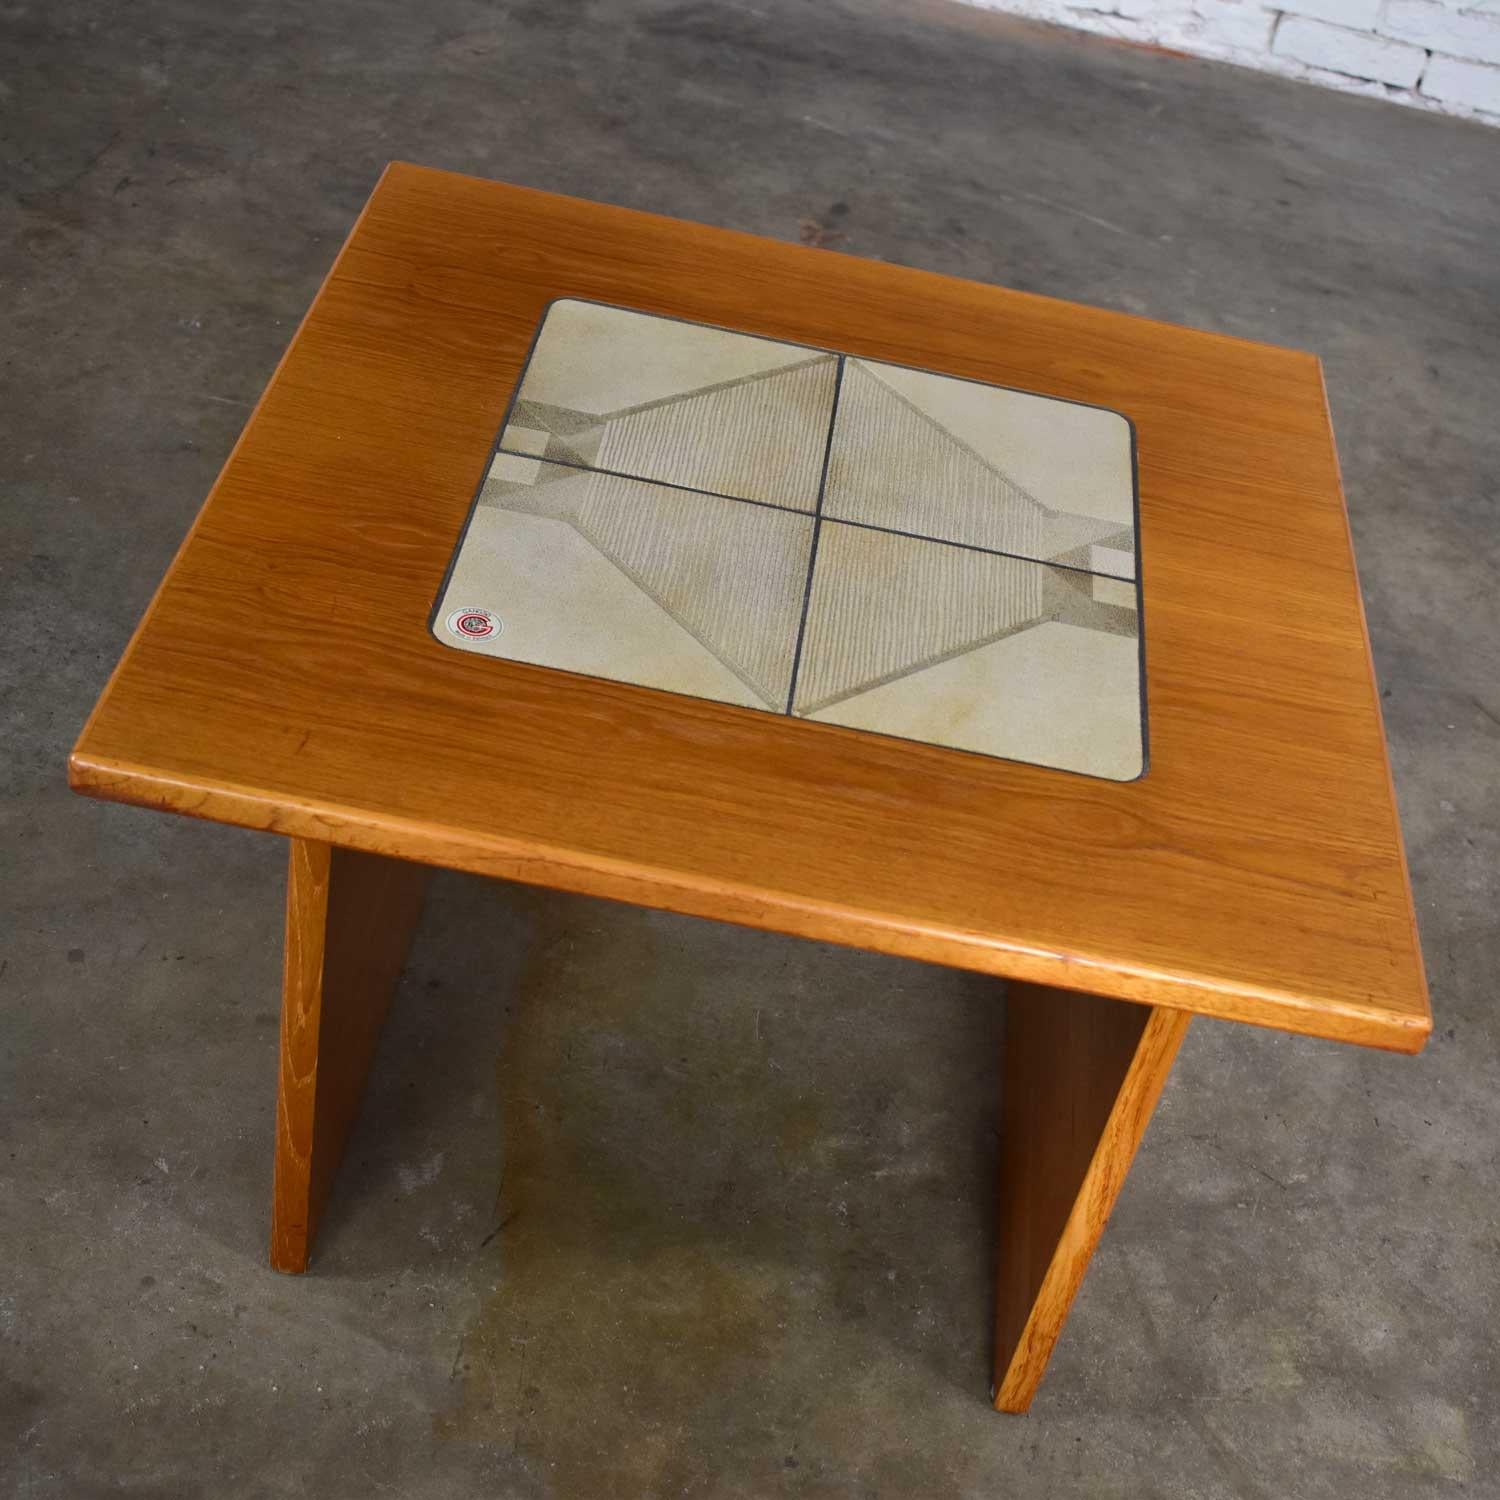 MCM Scandinavian Teak Side End Table Lovely Tile Insert by Gangso Mobler In Good Condition For Sale In Topeka, KS